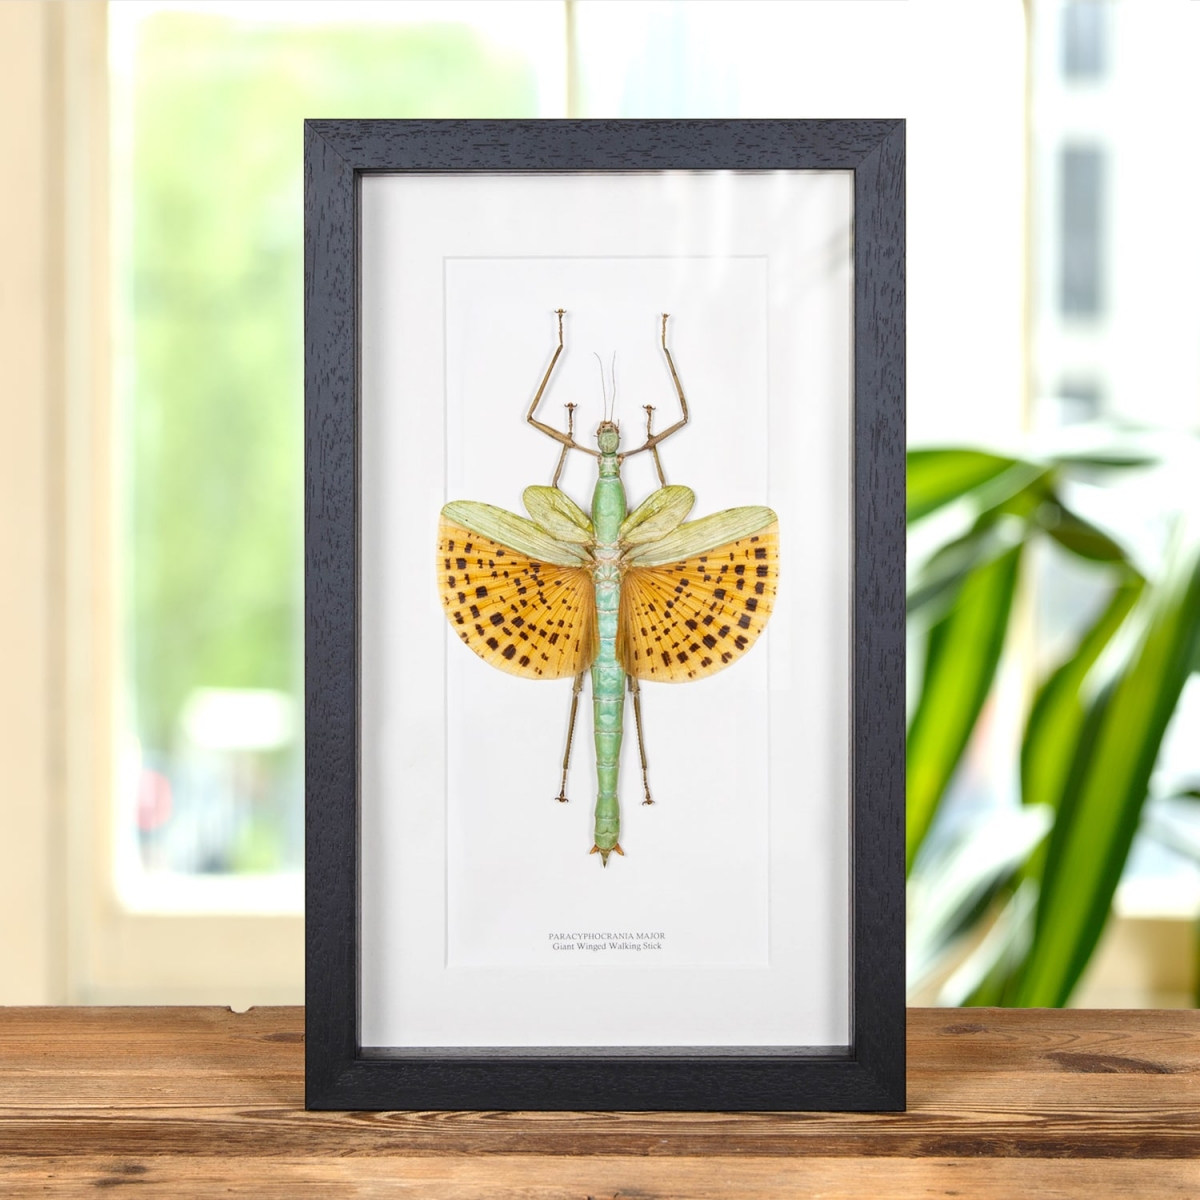 Minibeast Giant Winged Walking Stick in Box Frame (Paracyphocrania major)